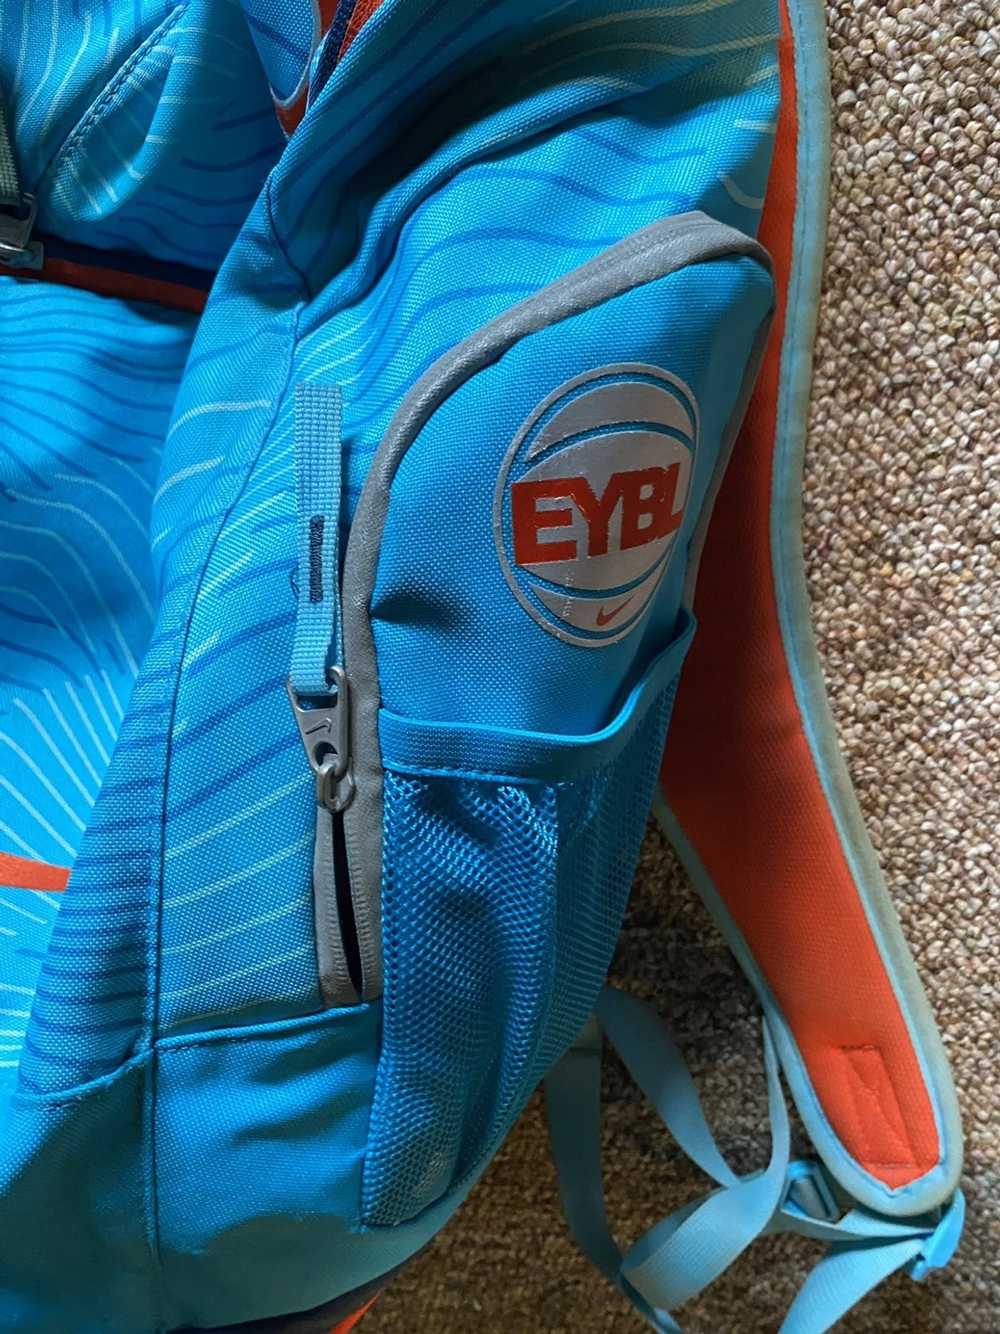 Nike Nike Eybl Backpack - image 3